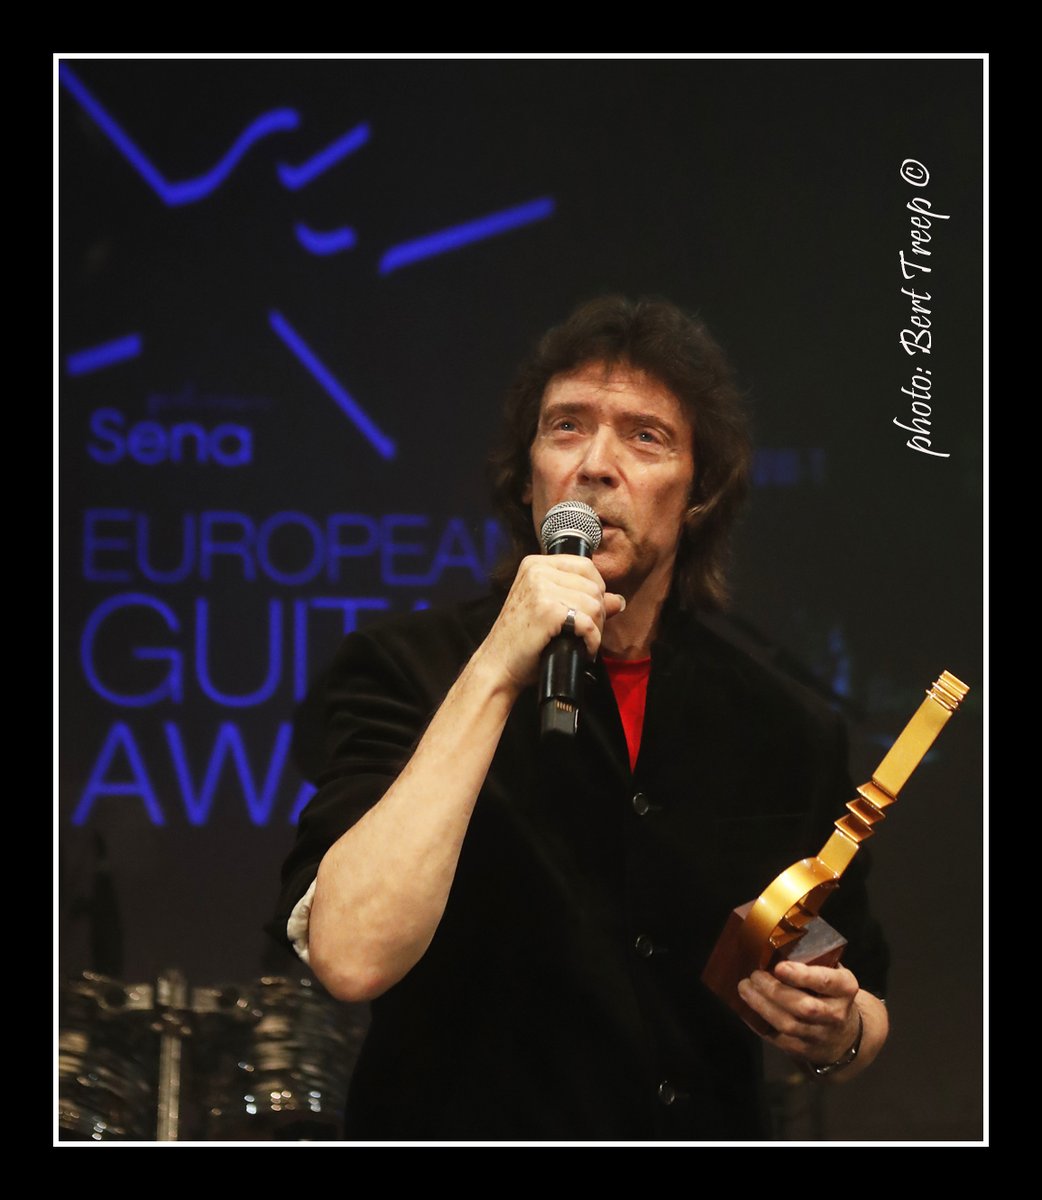 SENA European Guitar Award 27-10-2022 @GebouwT 7) uitreiking award Steve Hackett